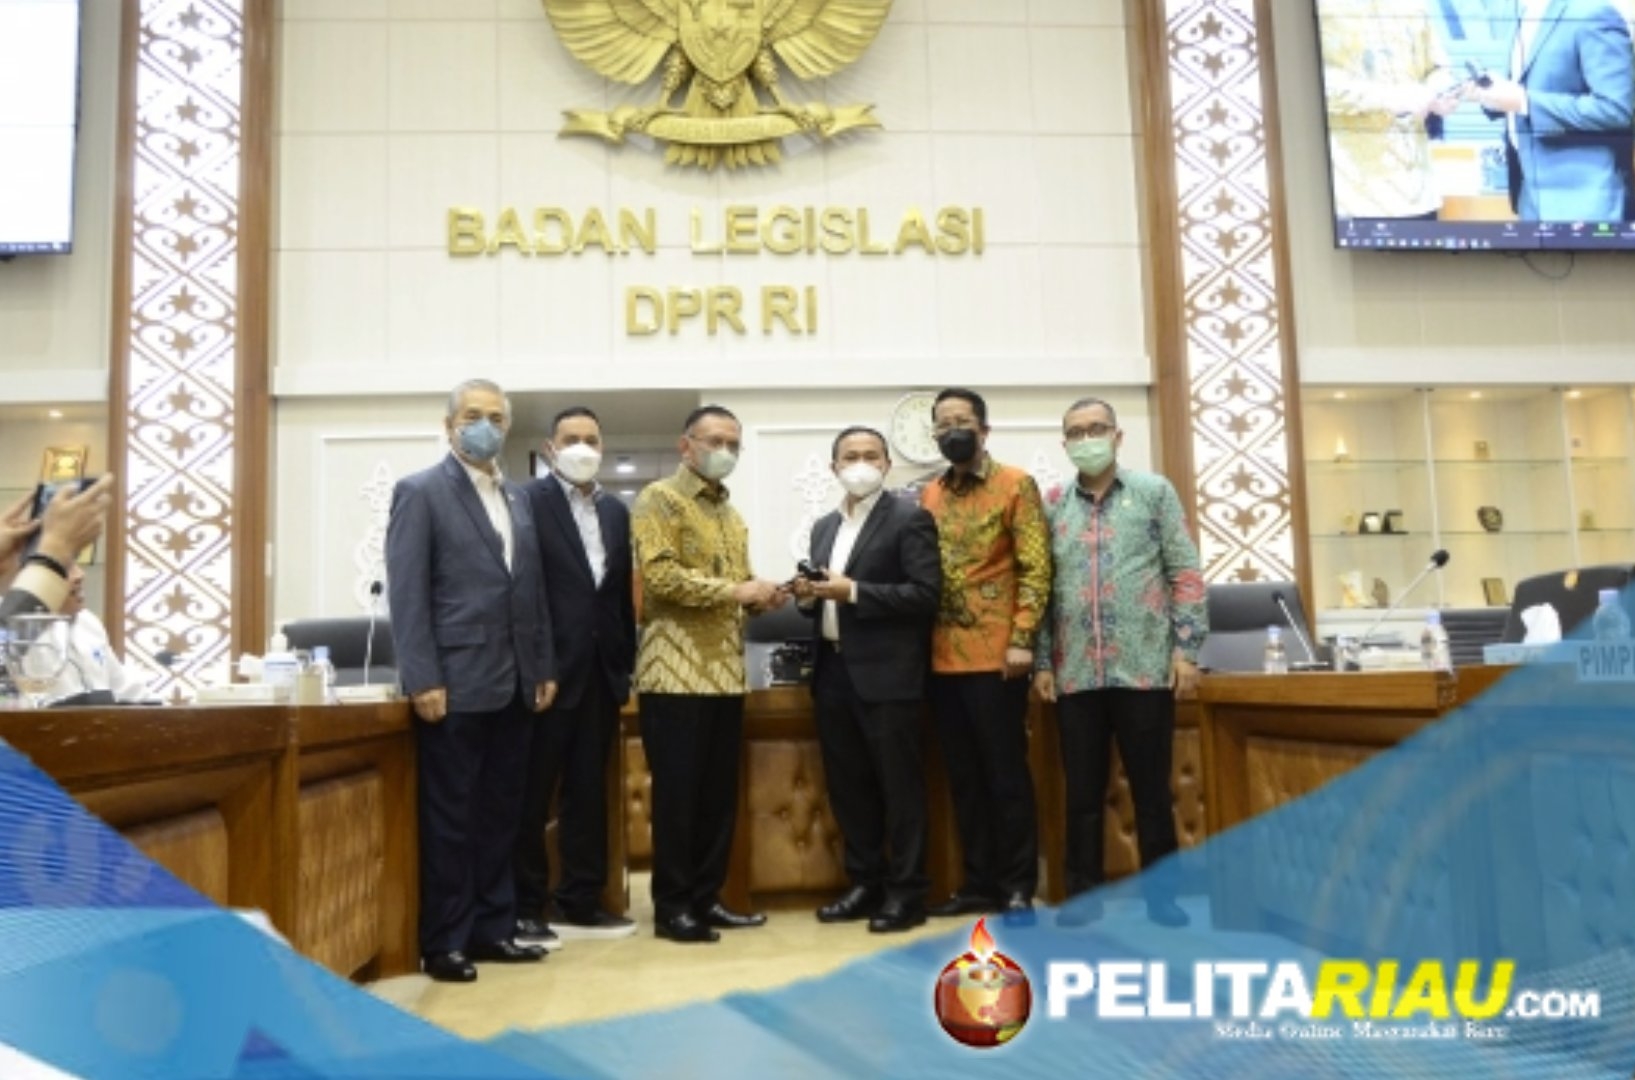 Abdul Wahid Dari Riau Ditetapkan Jadi Pimpinan Banleg DPR RI